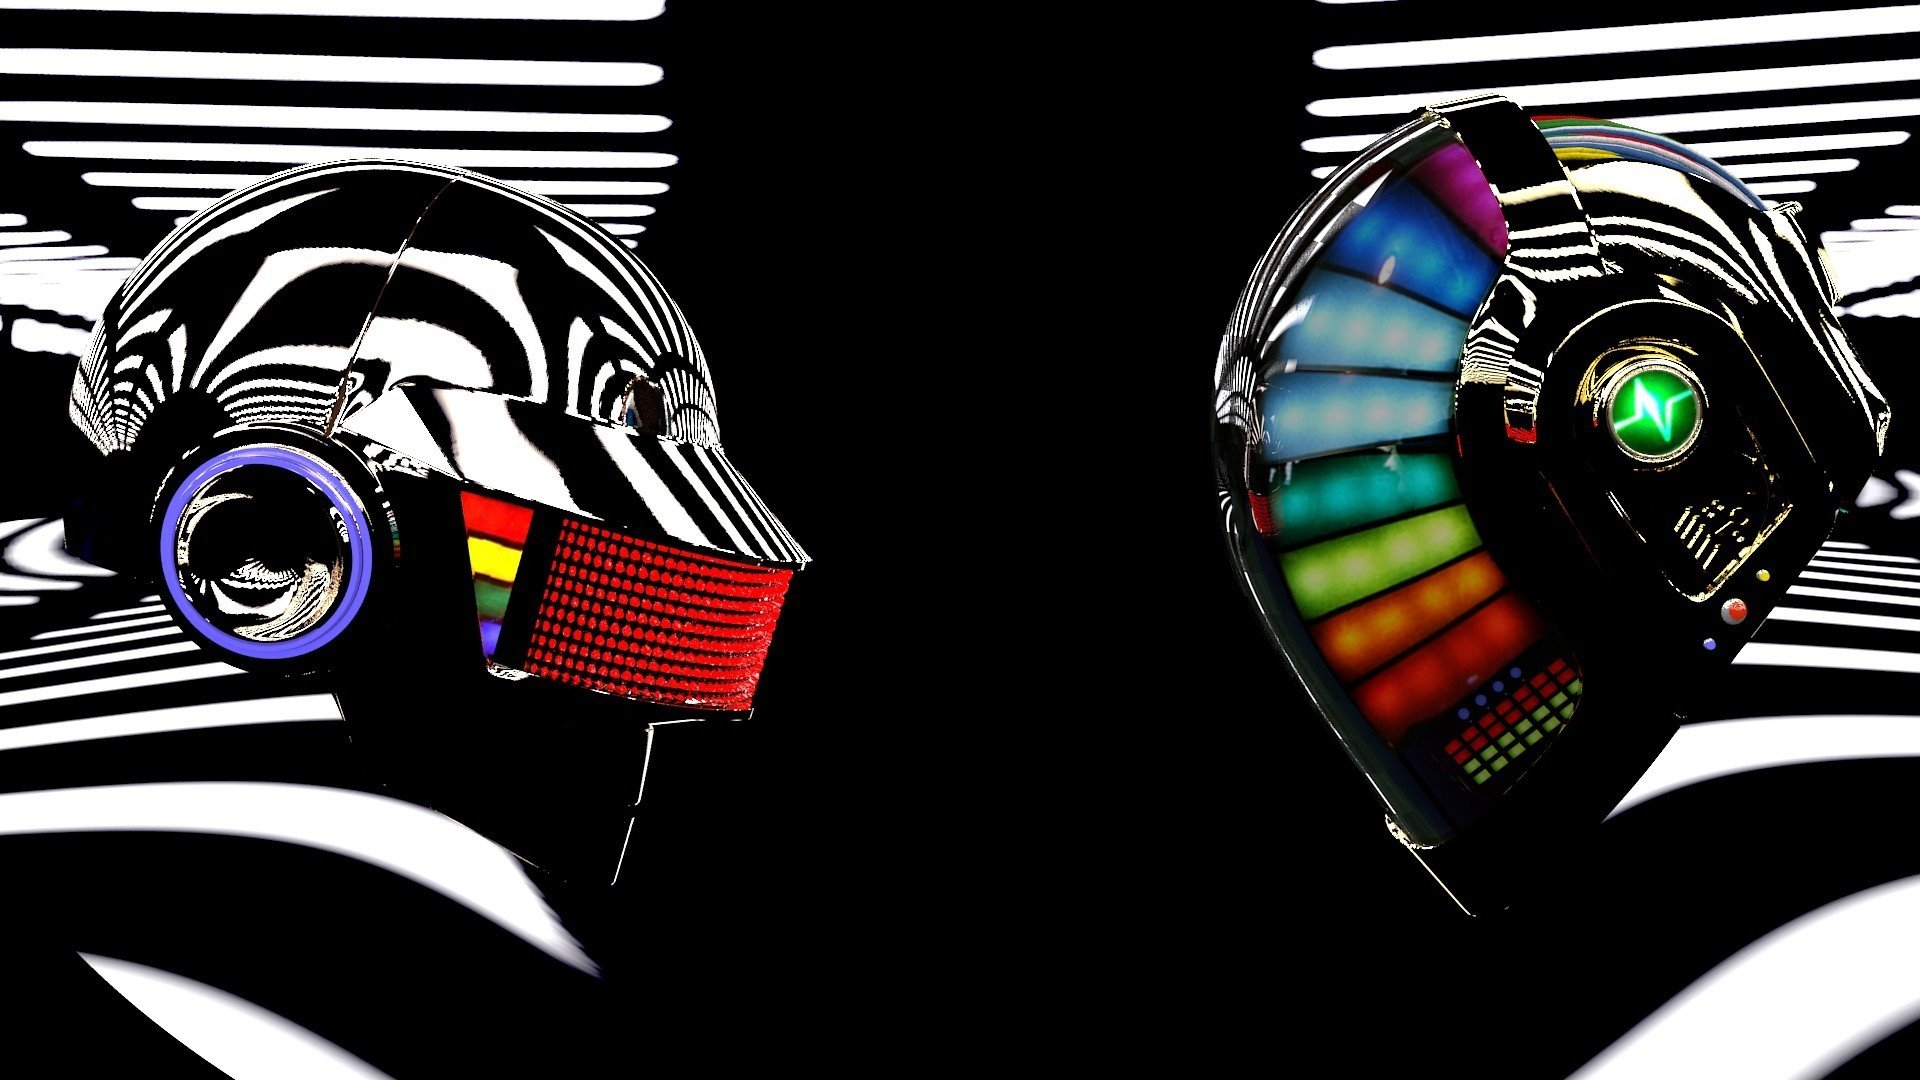 Daft Punk Electronic House Electro Mask Robot Sci Fi Wallpaper